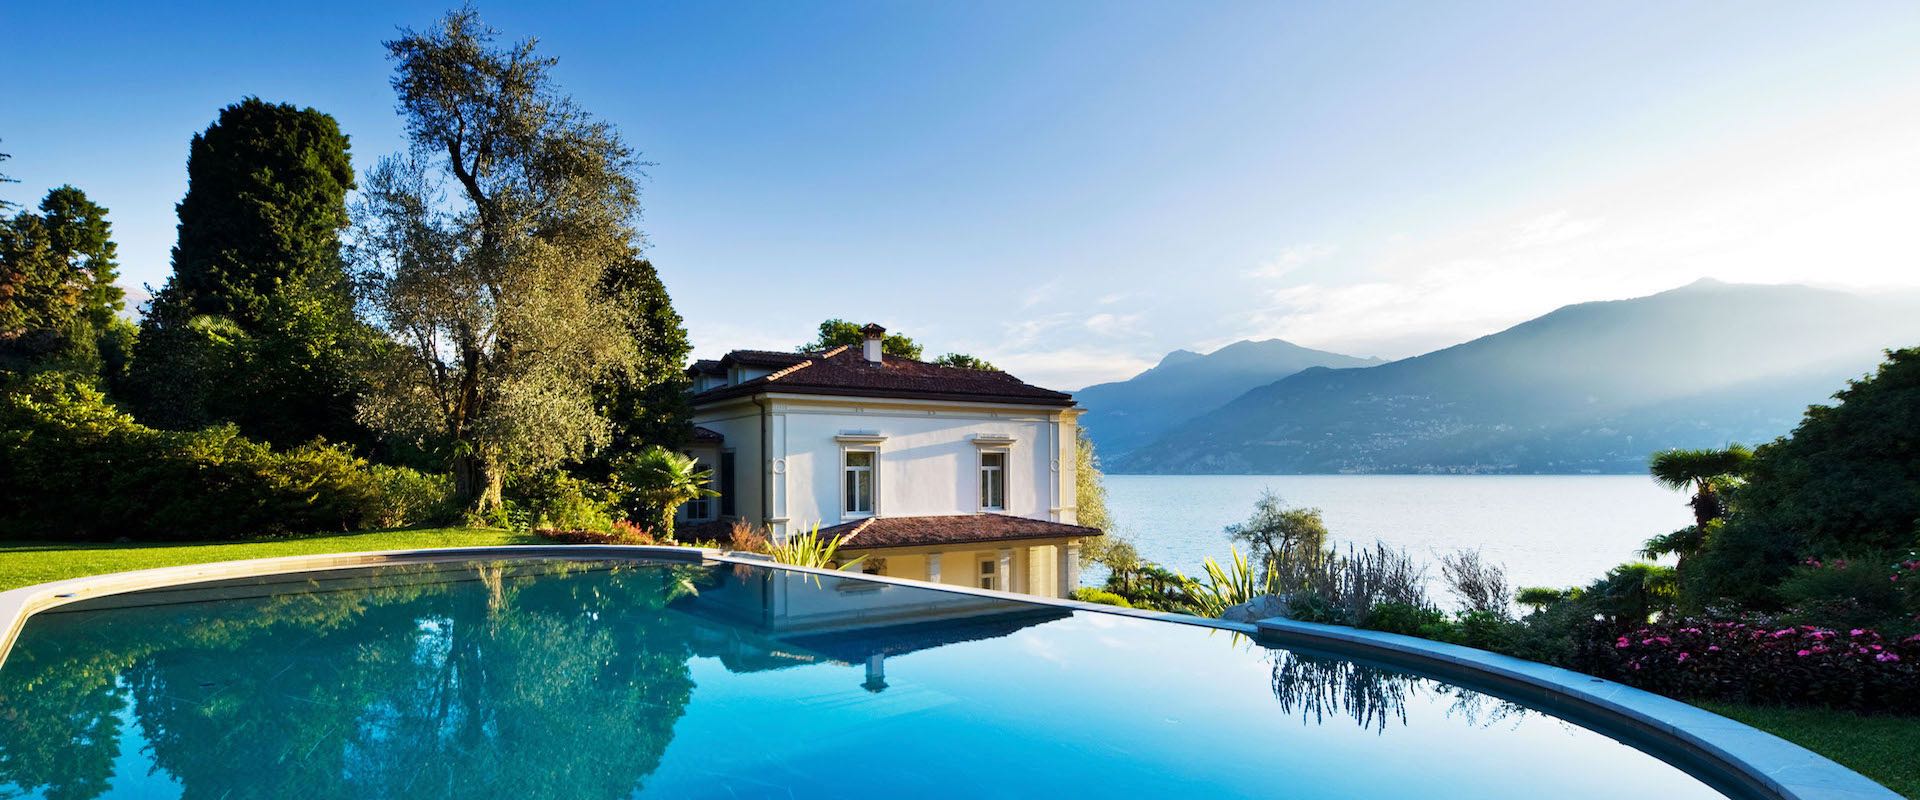 View of Lake Como from Villa Cassiopea' swimming pool